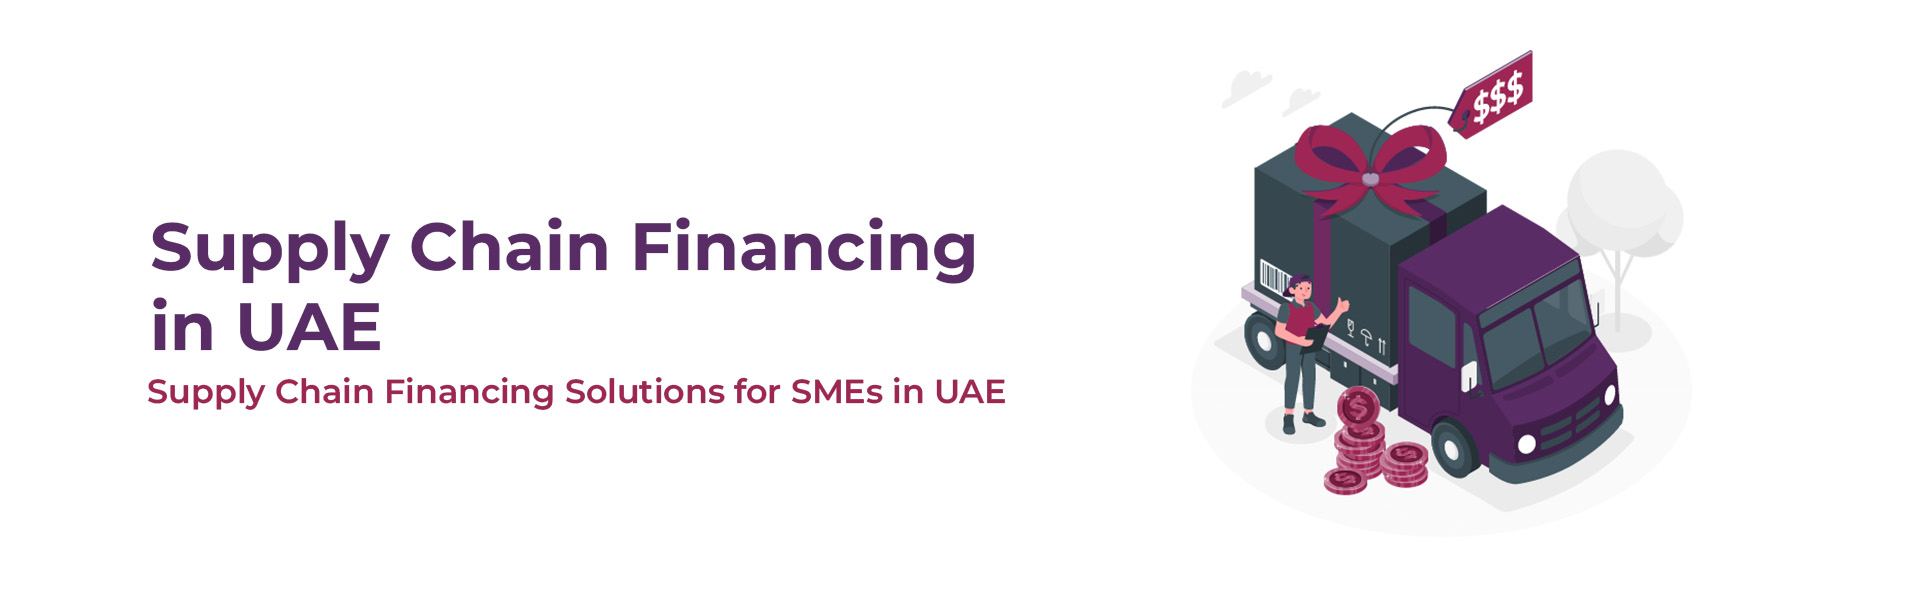 Supply Chain Financing in UAE